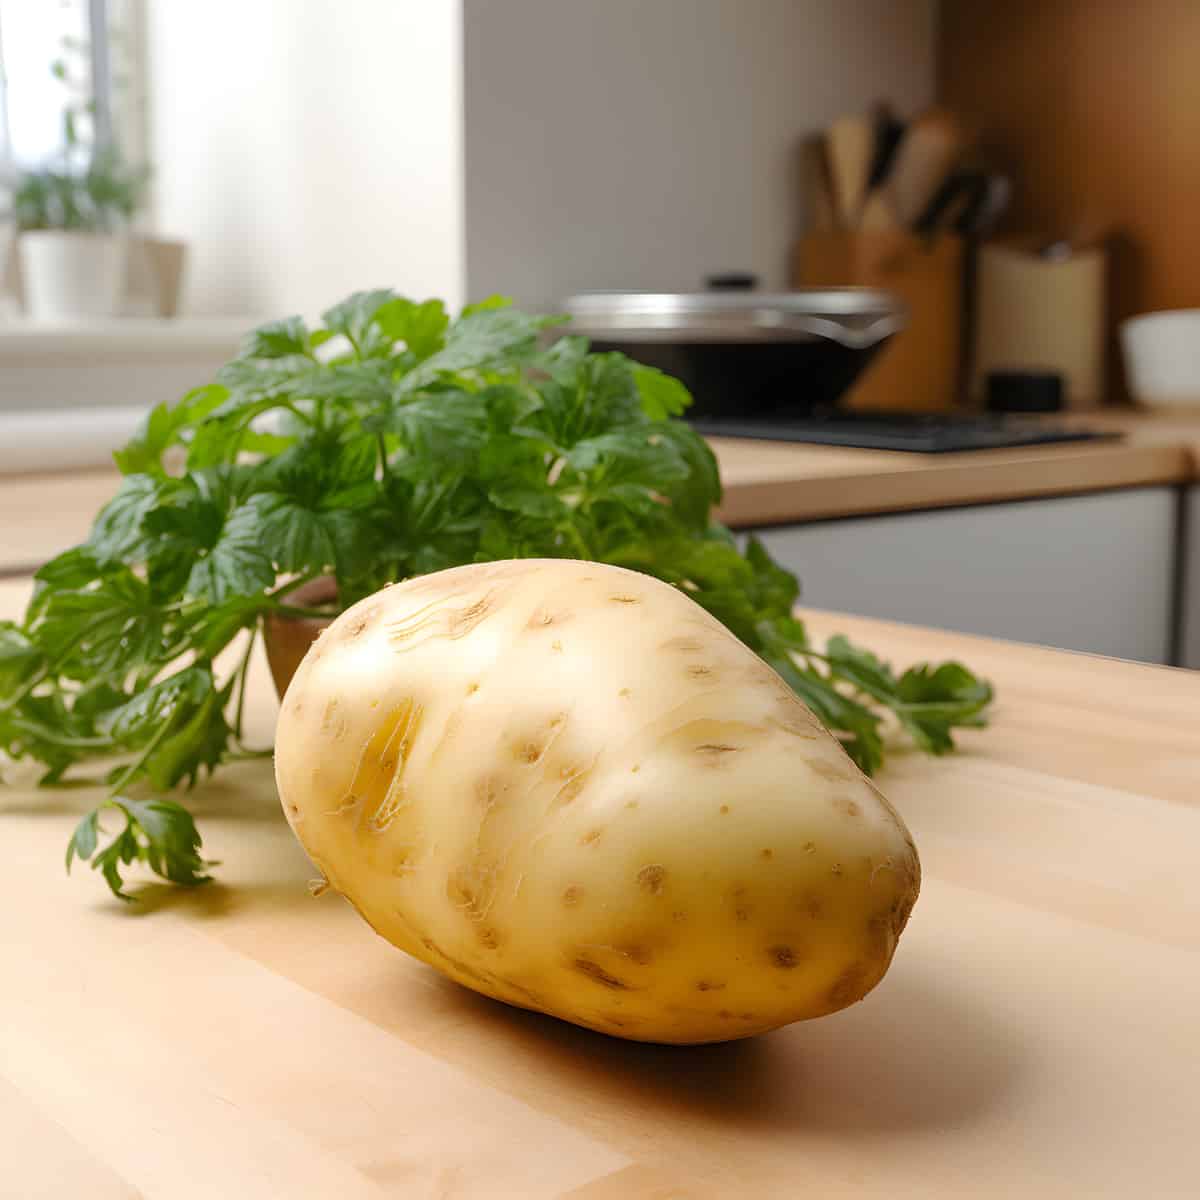 Black Champion Potatoes on a kitchen counter